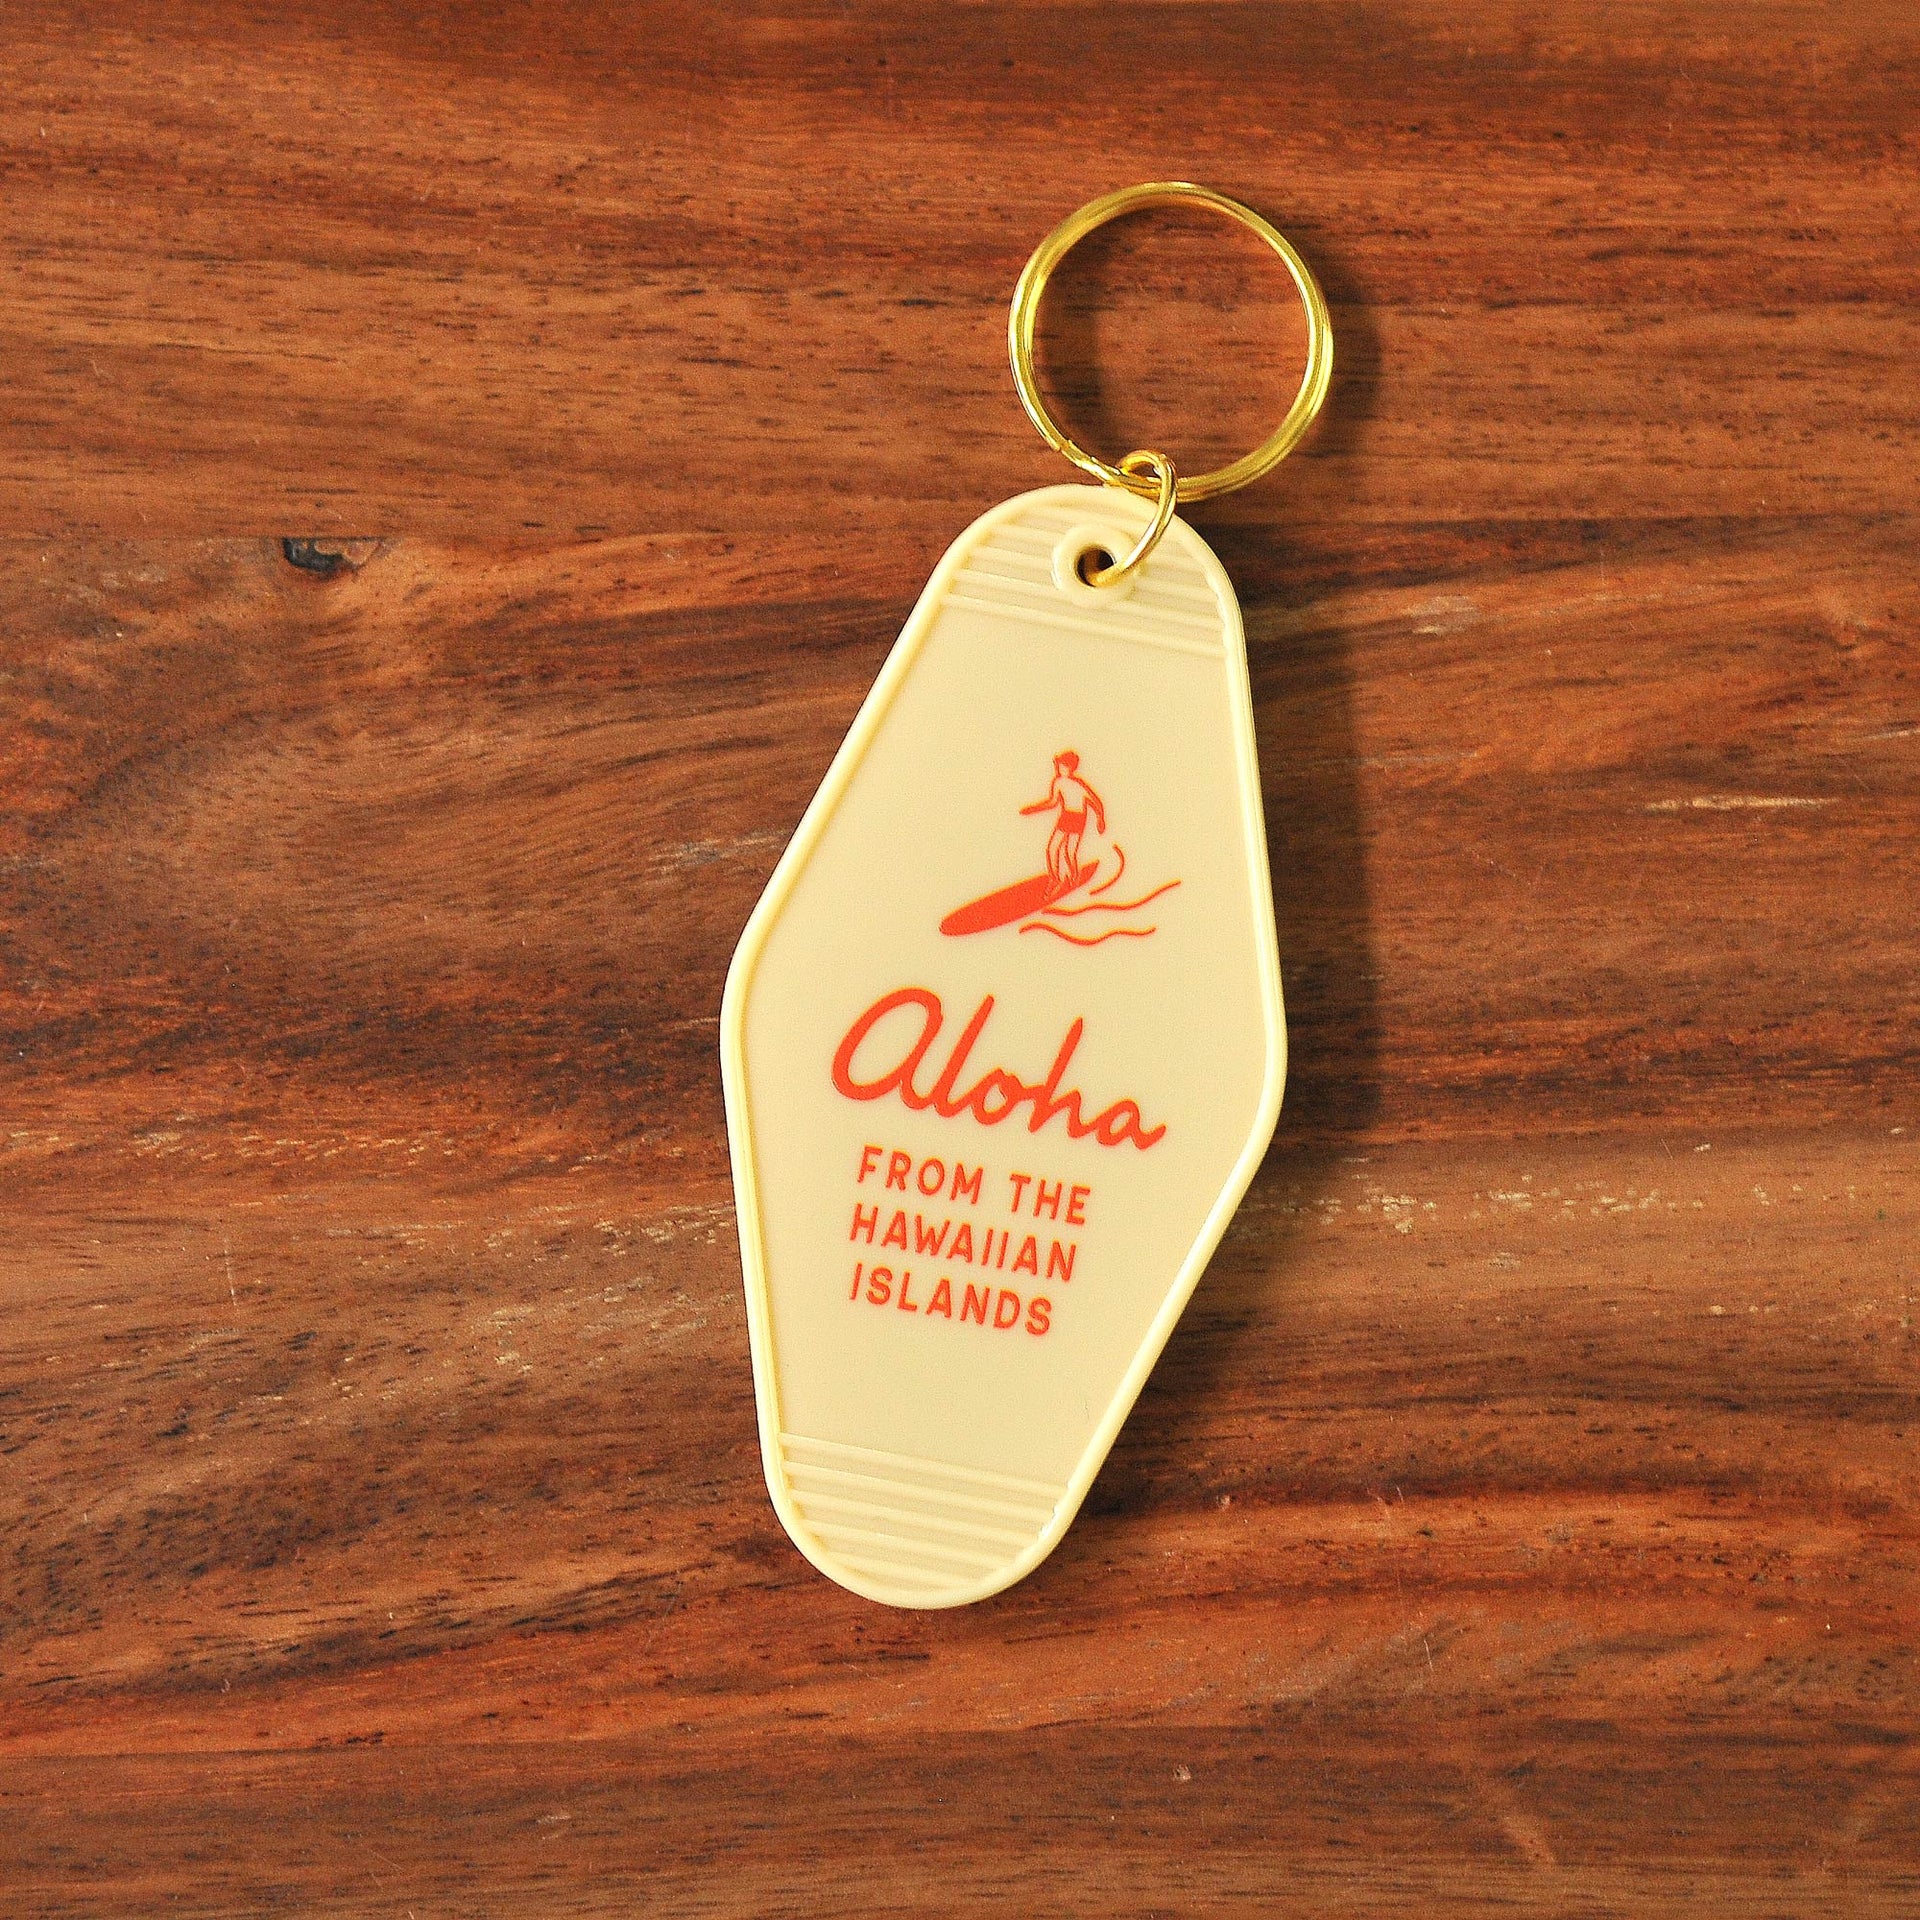 Aloha from the Hawaiian Islands vintage keychain cream by Nick Kuchar